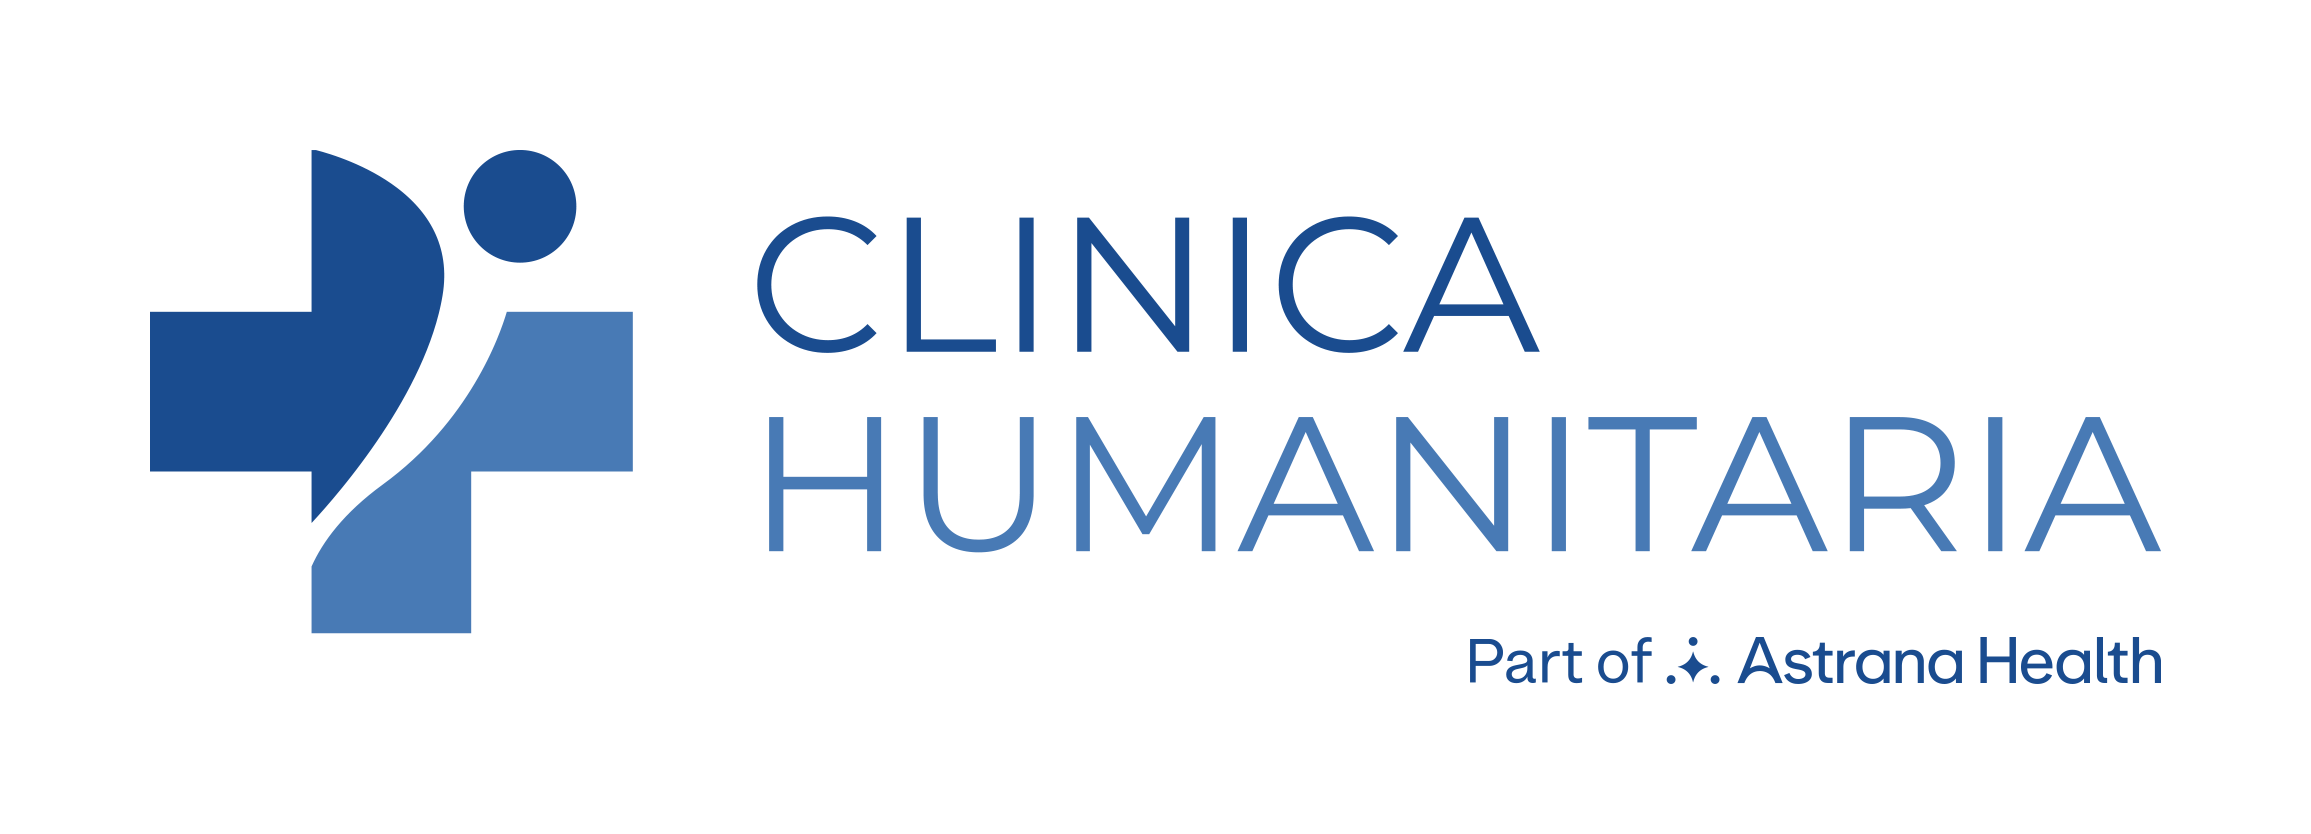 Clinica Humanitaria Logo